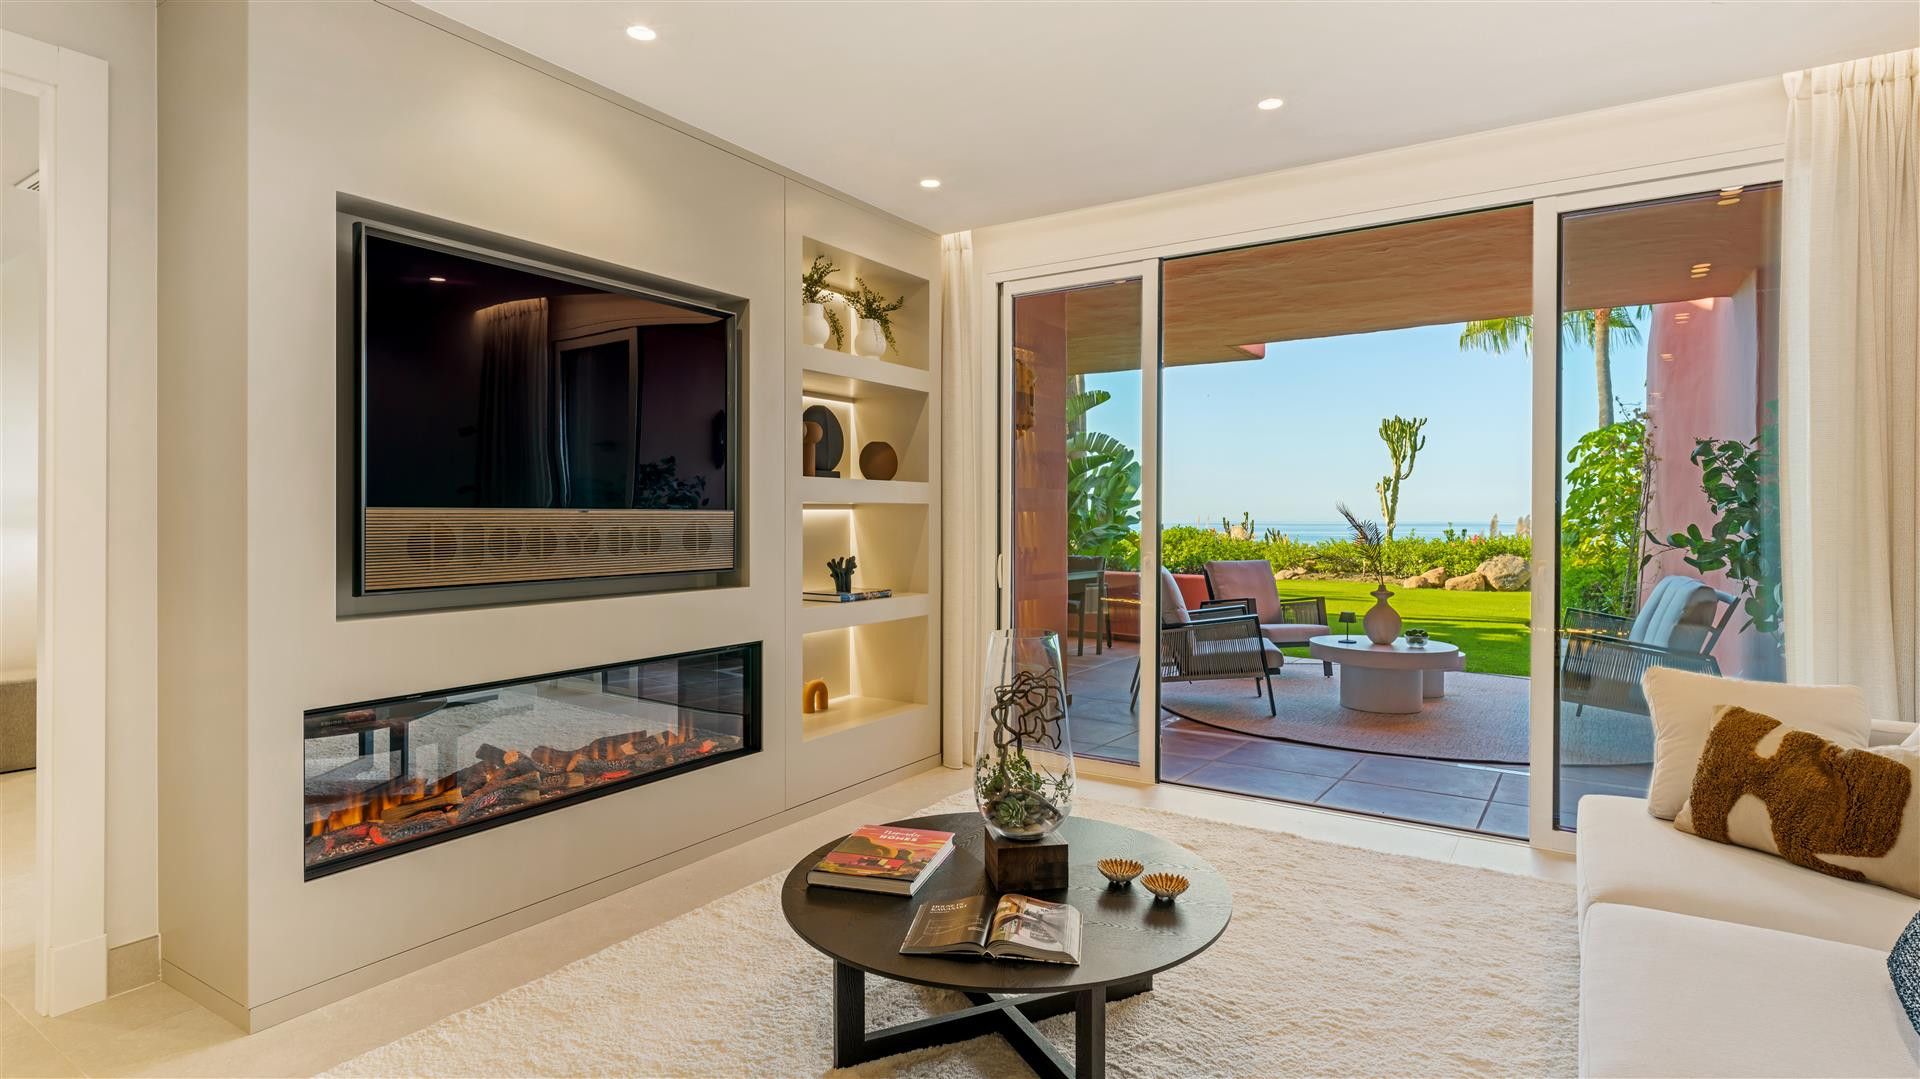 Luxury beachront apartment on the New Golden Mile of Estepona!